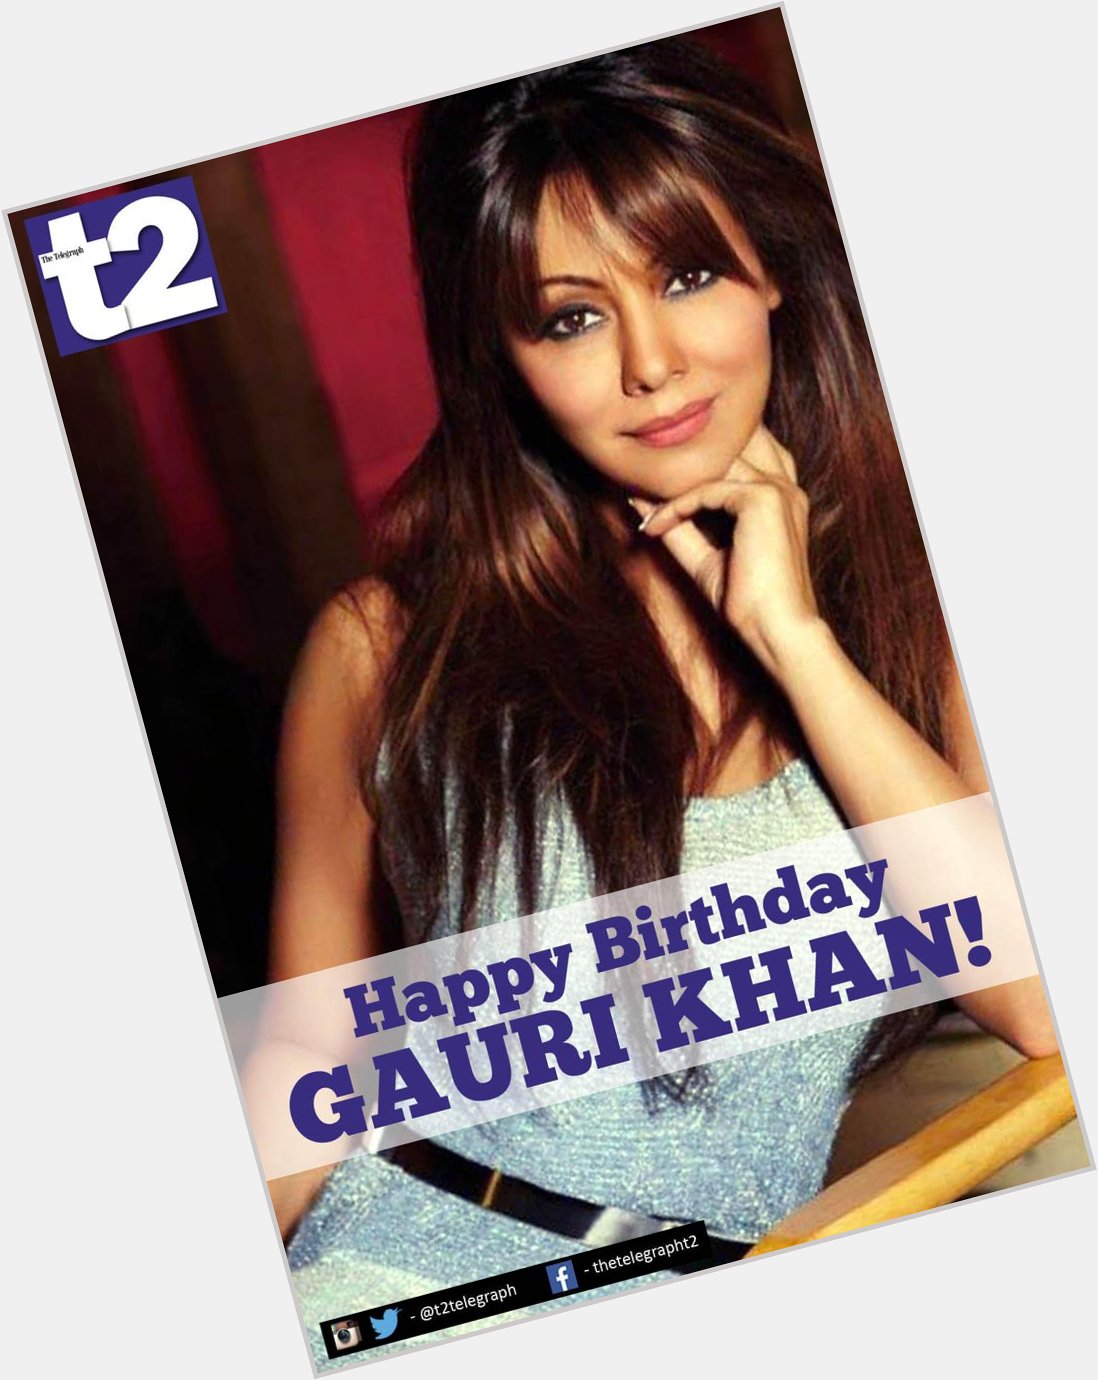 Happy birthday Mrs Khan! 
Is Gauri Khan the hottest celeb wife? 